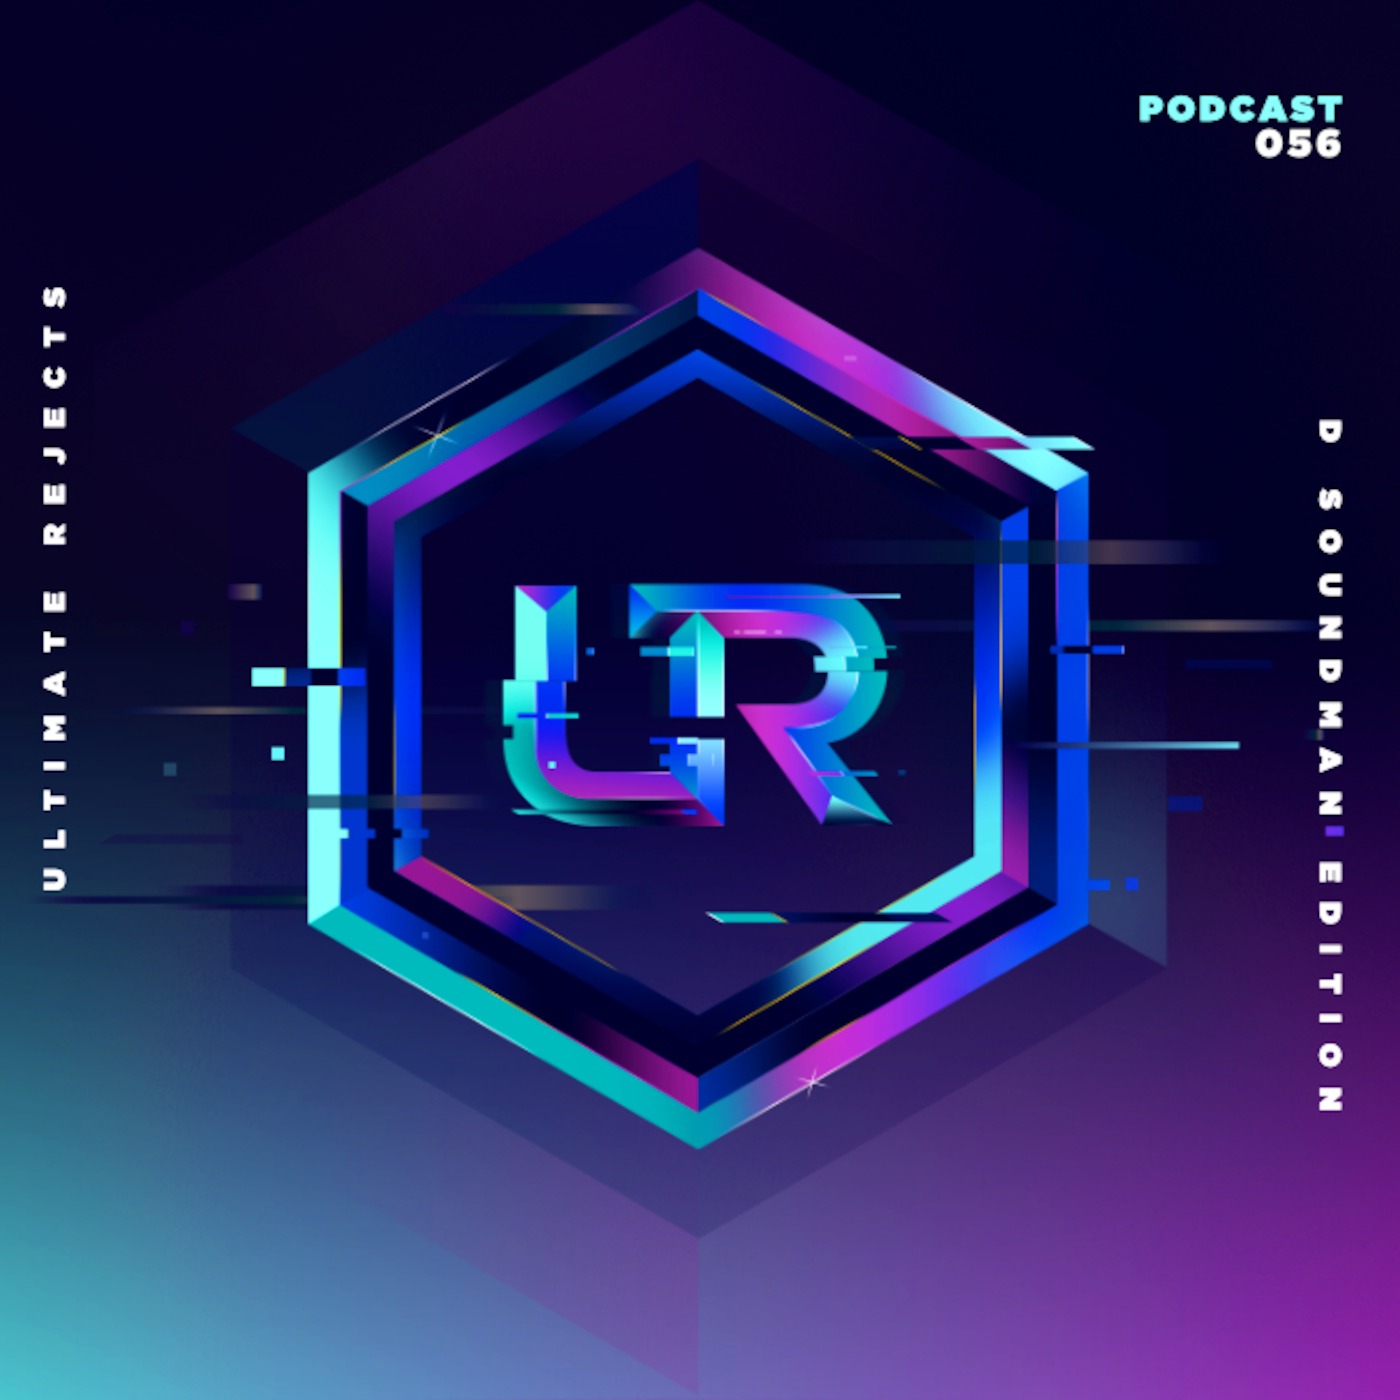 Ultimate Rejects UR Podcast 056 (D Soundman Edition)